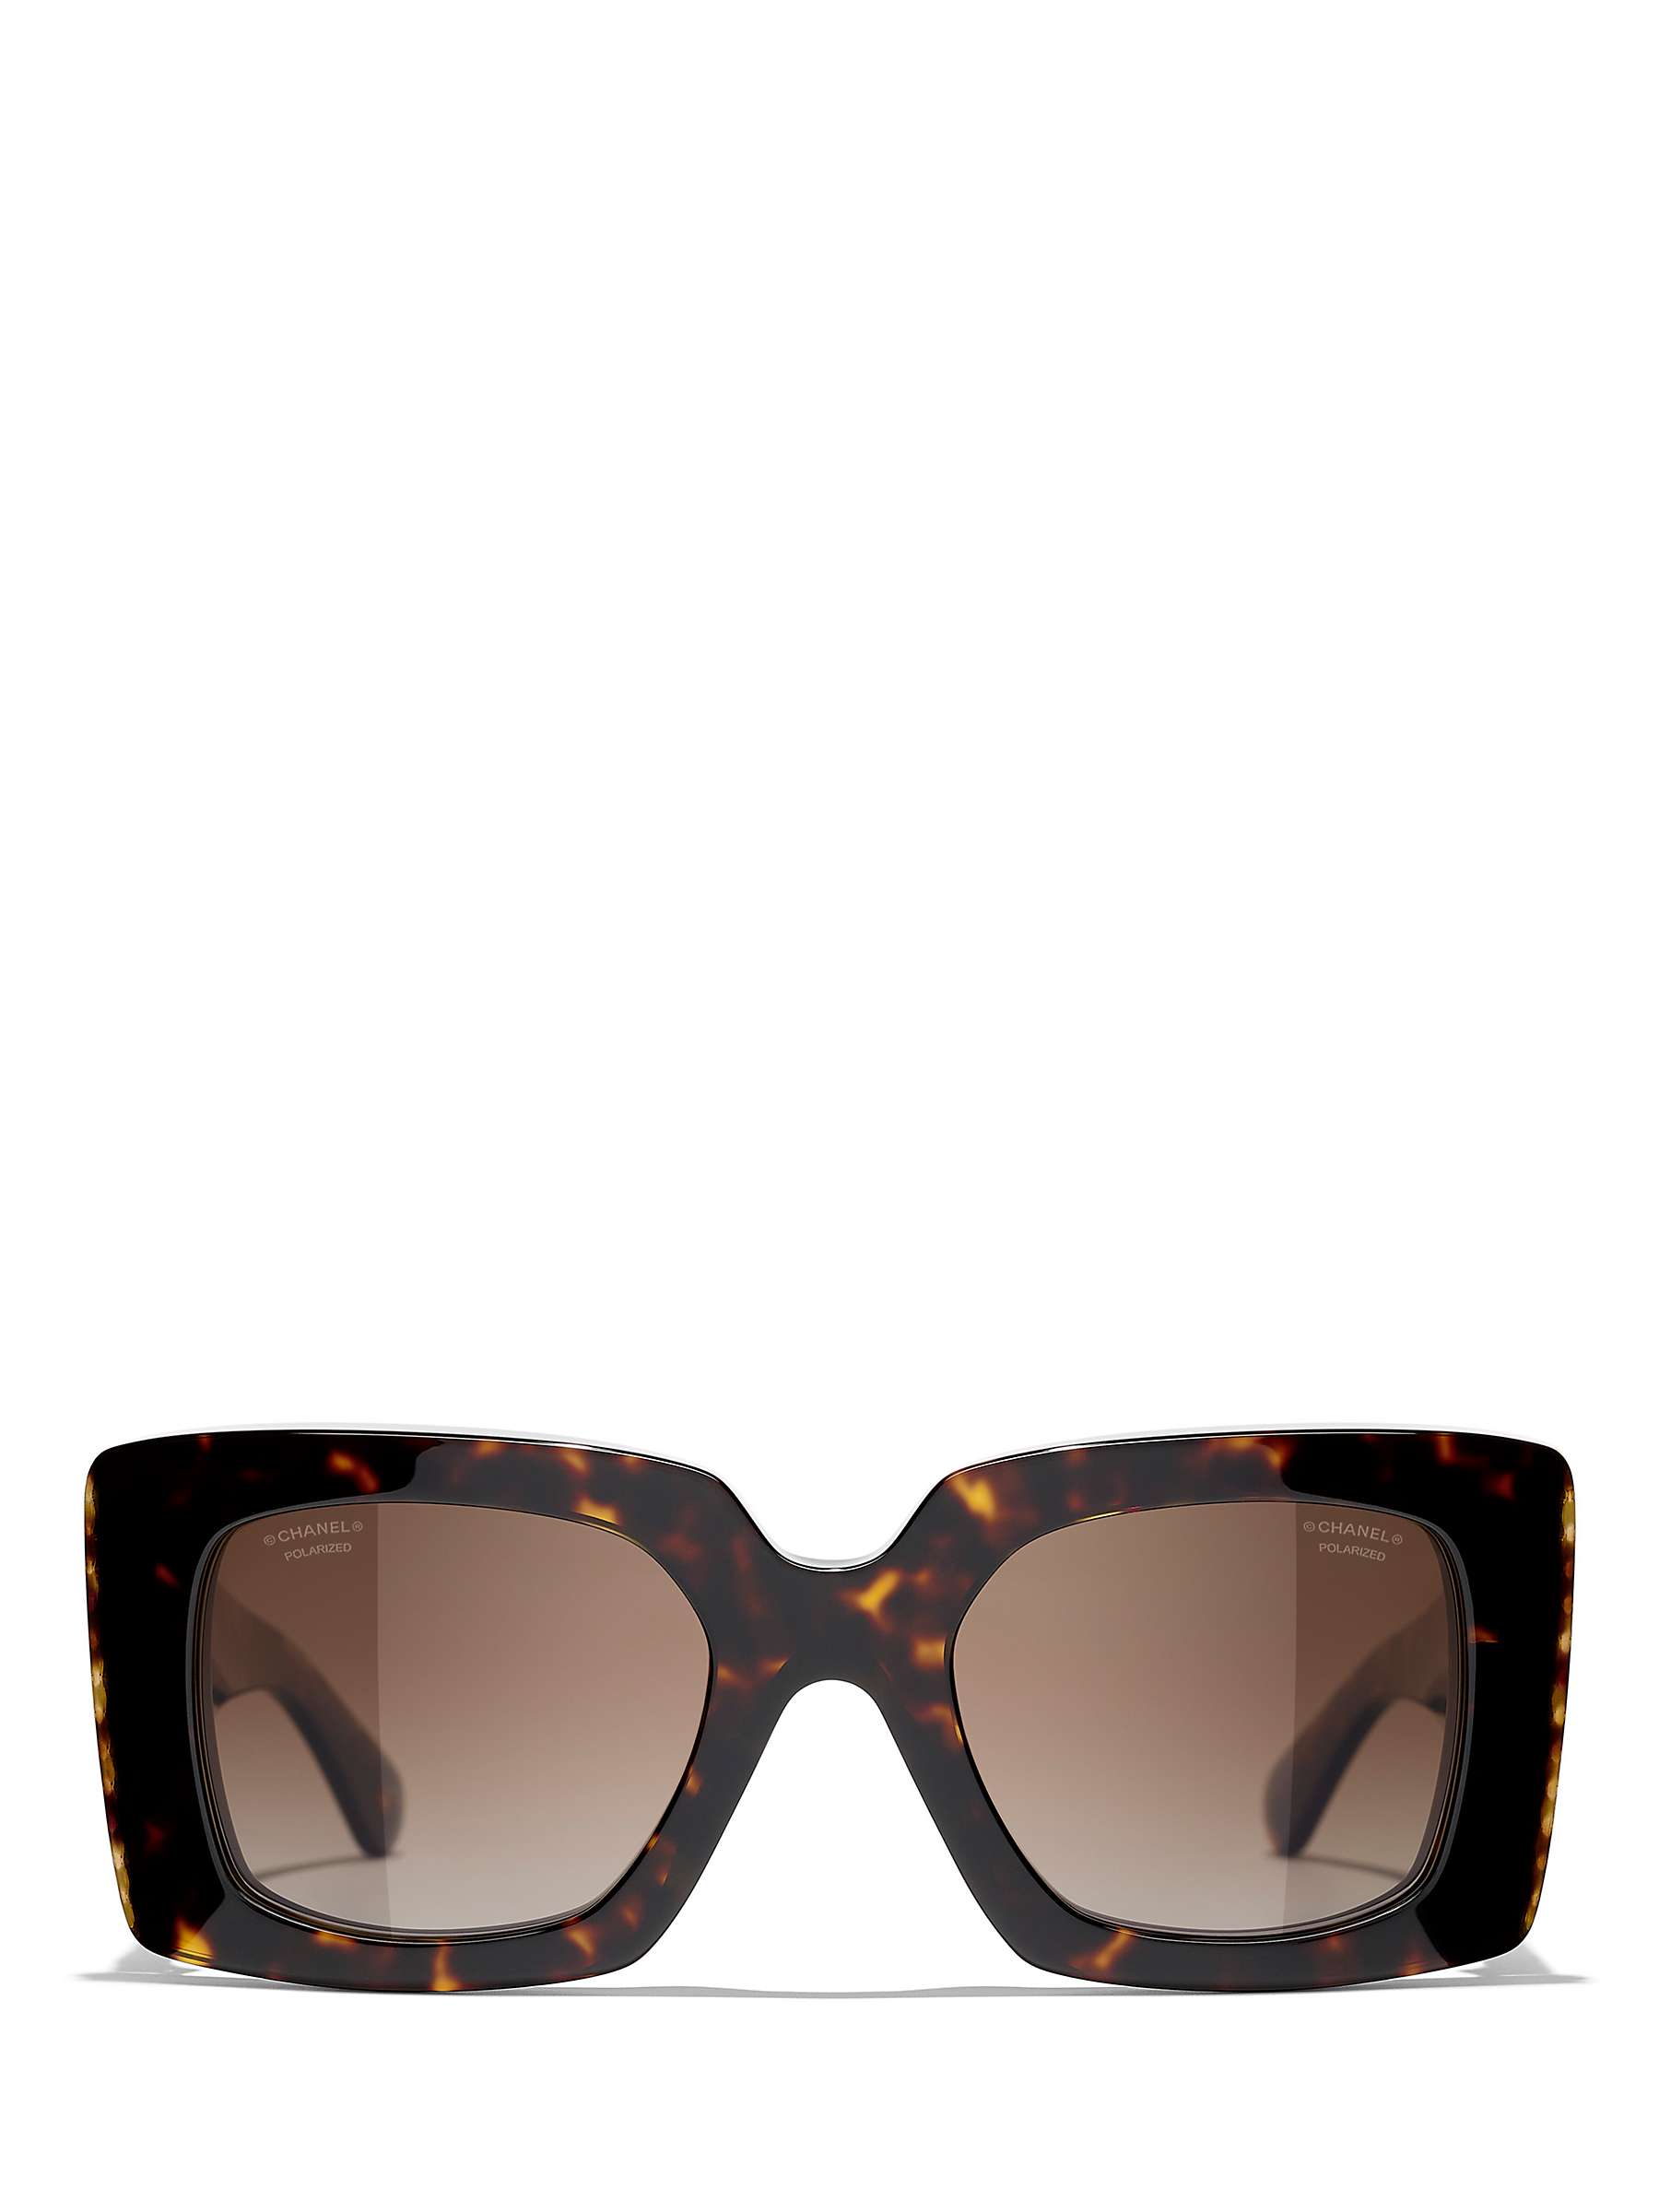 Buy CHANEL Rectangular Sunglasses CH5480H Dark Havana/Brown Gradient Online at johnlewis.com